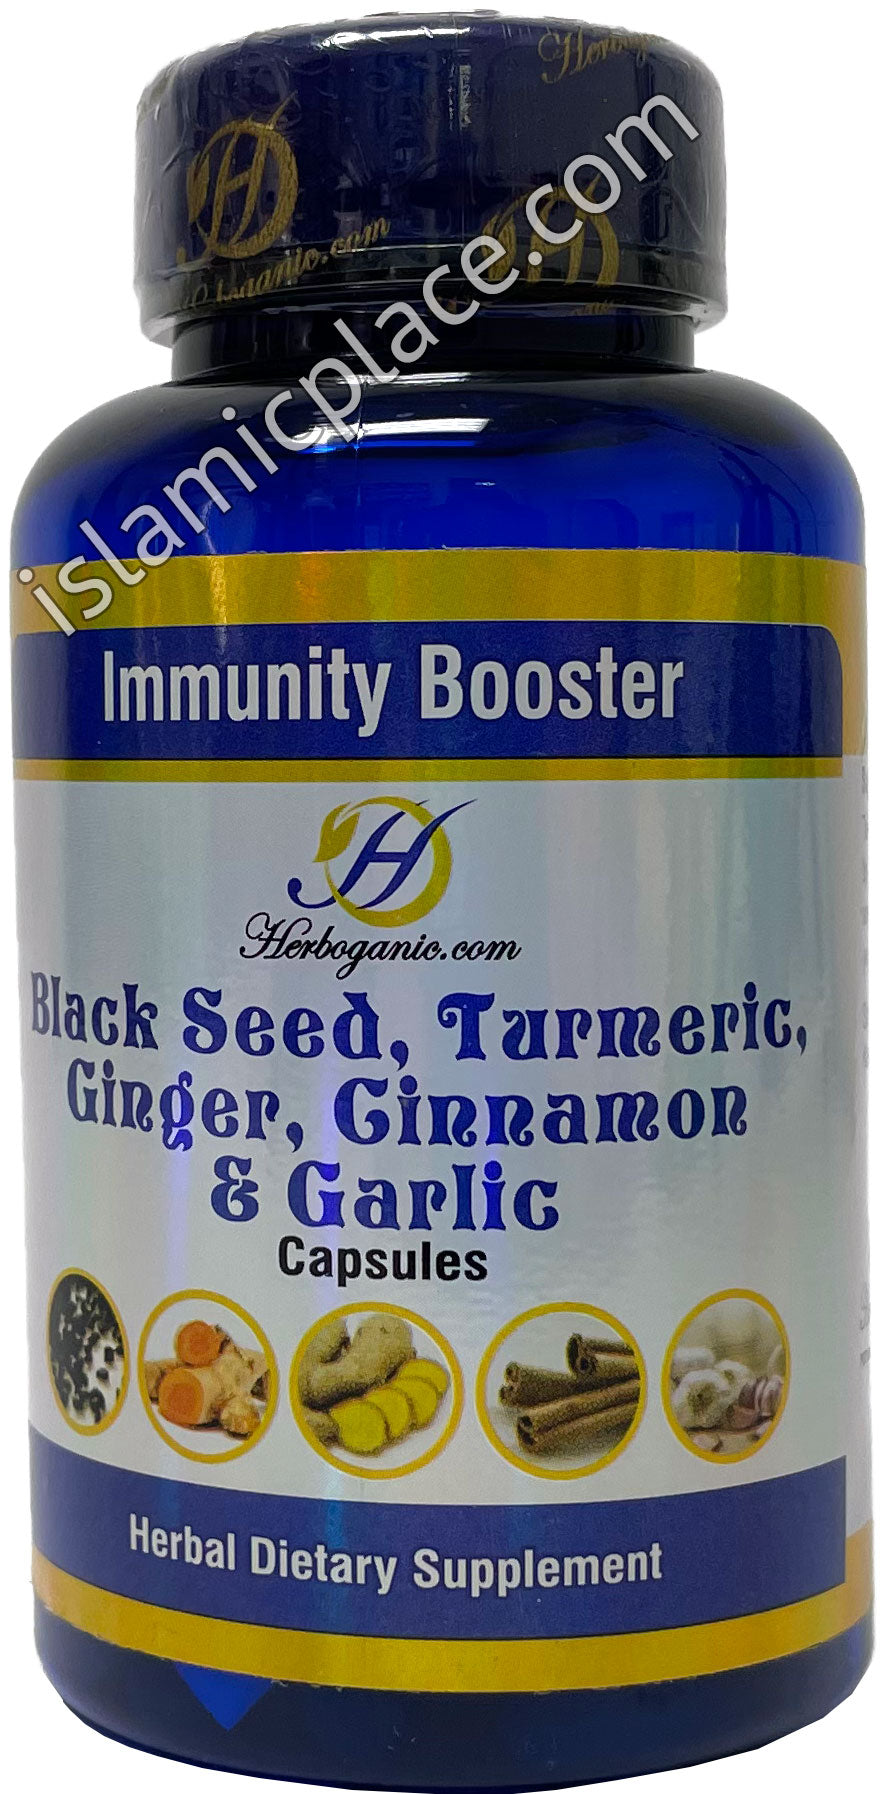 Immunity Booster - Black Seed, Turmeric, Ginger, Cinnamon & Garlic Capsules